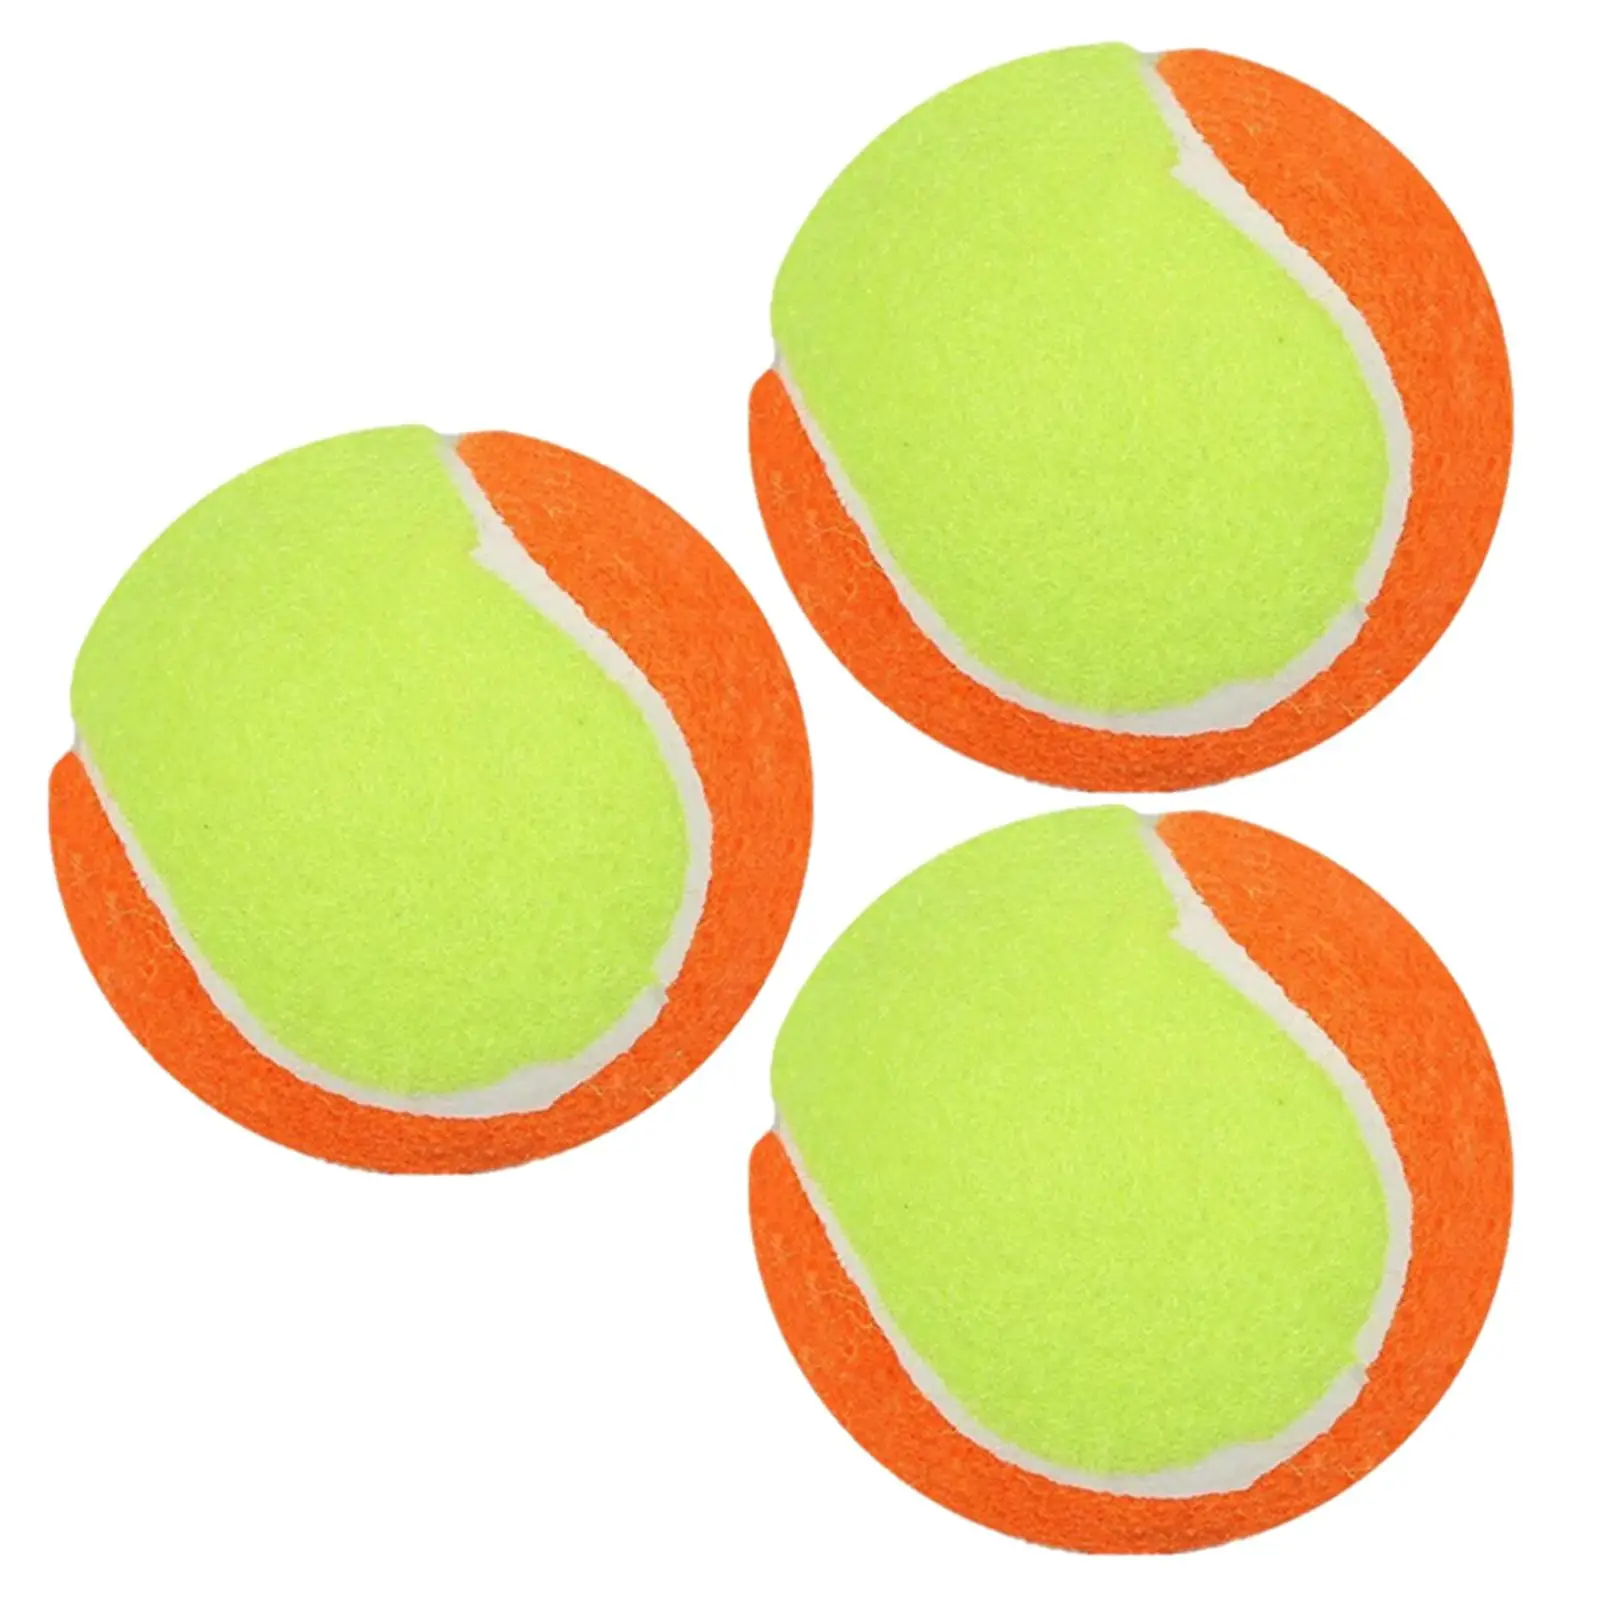 3x Training Tennis Balls Easily pinwheel Rubber Practice Tennis Training Tennis Balls for Outdoor Tour Adult Dogs